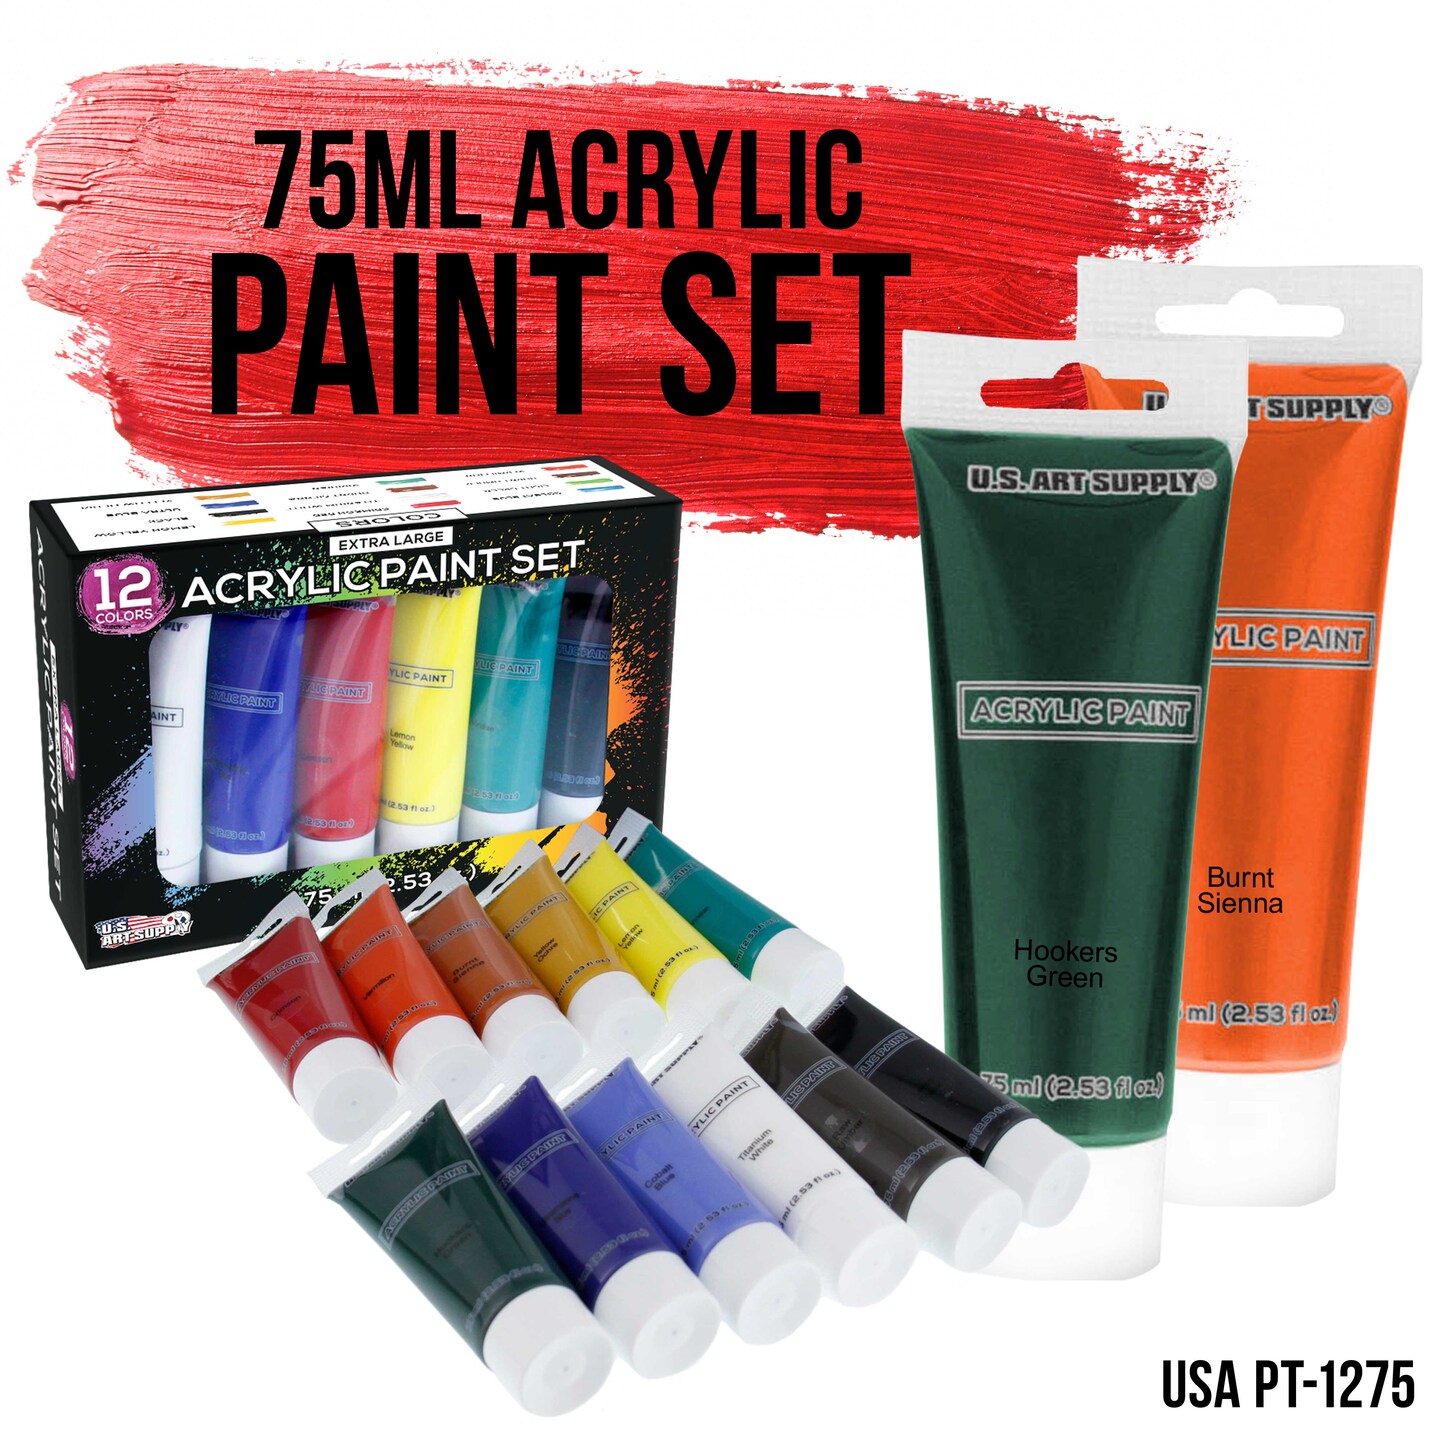 36 Color Oil Paint Value Pack by Artist's Loft™ Necessities™